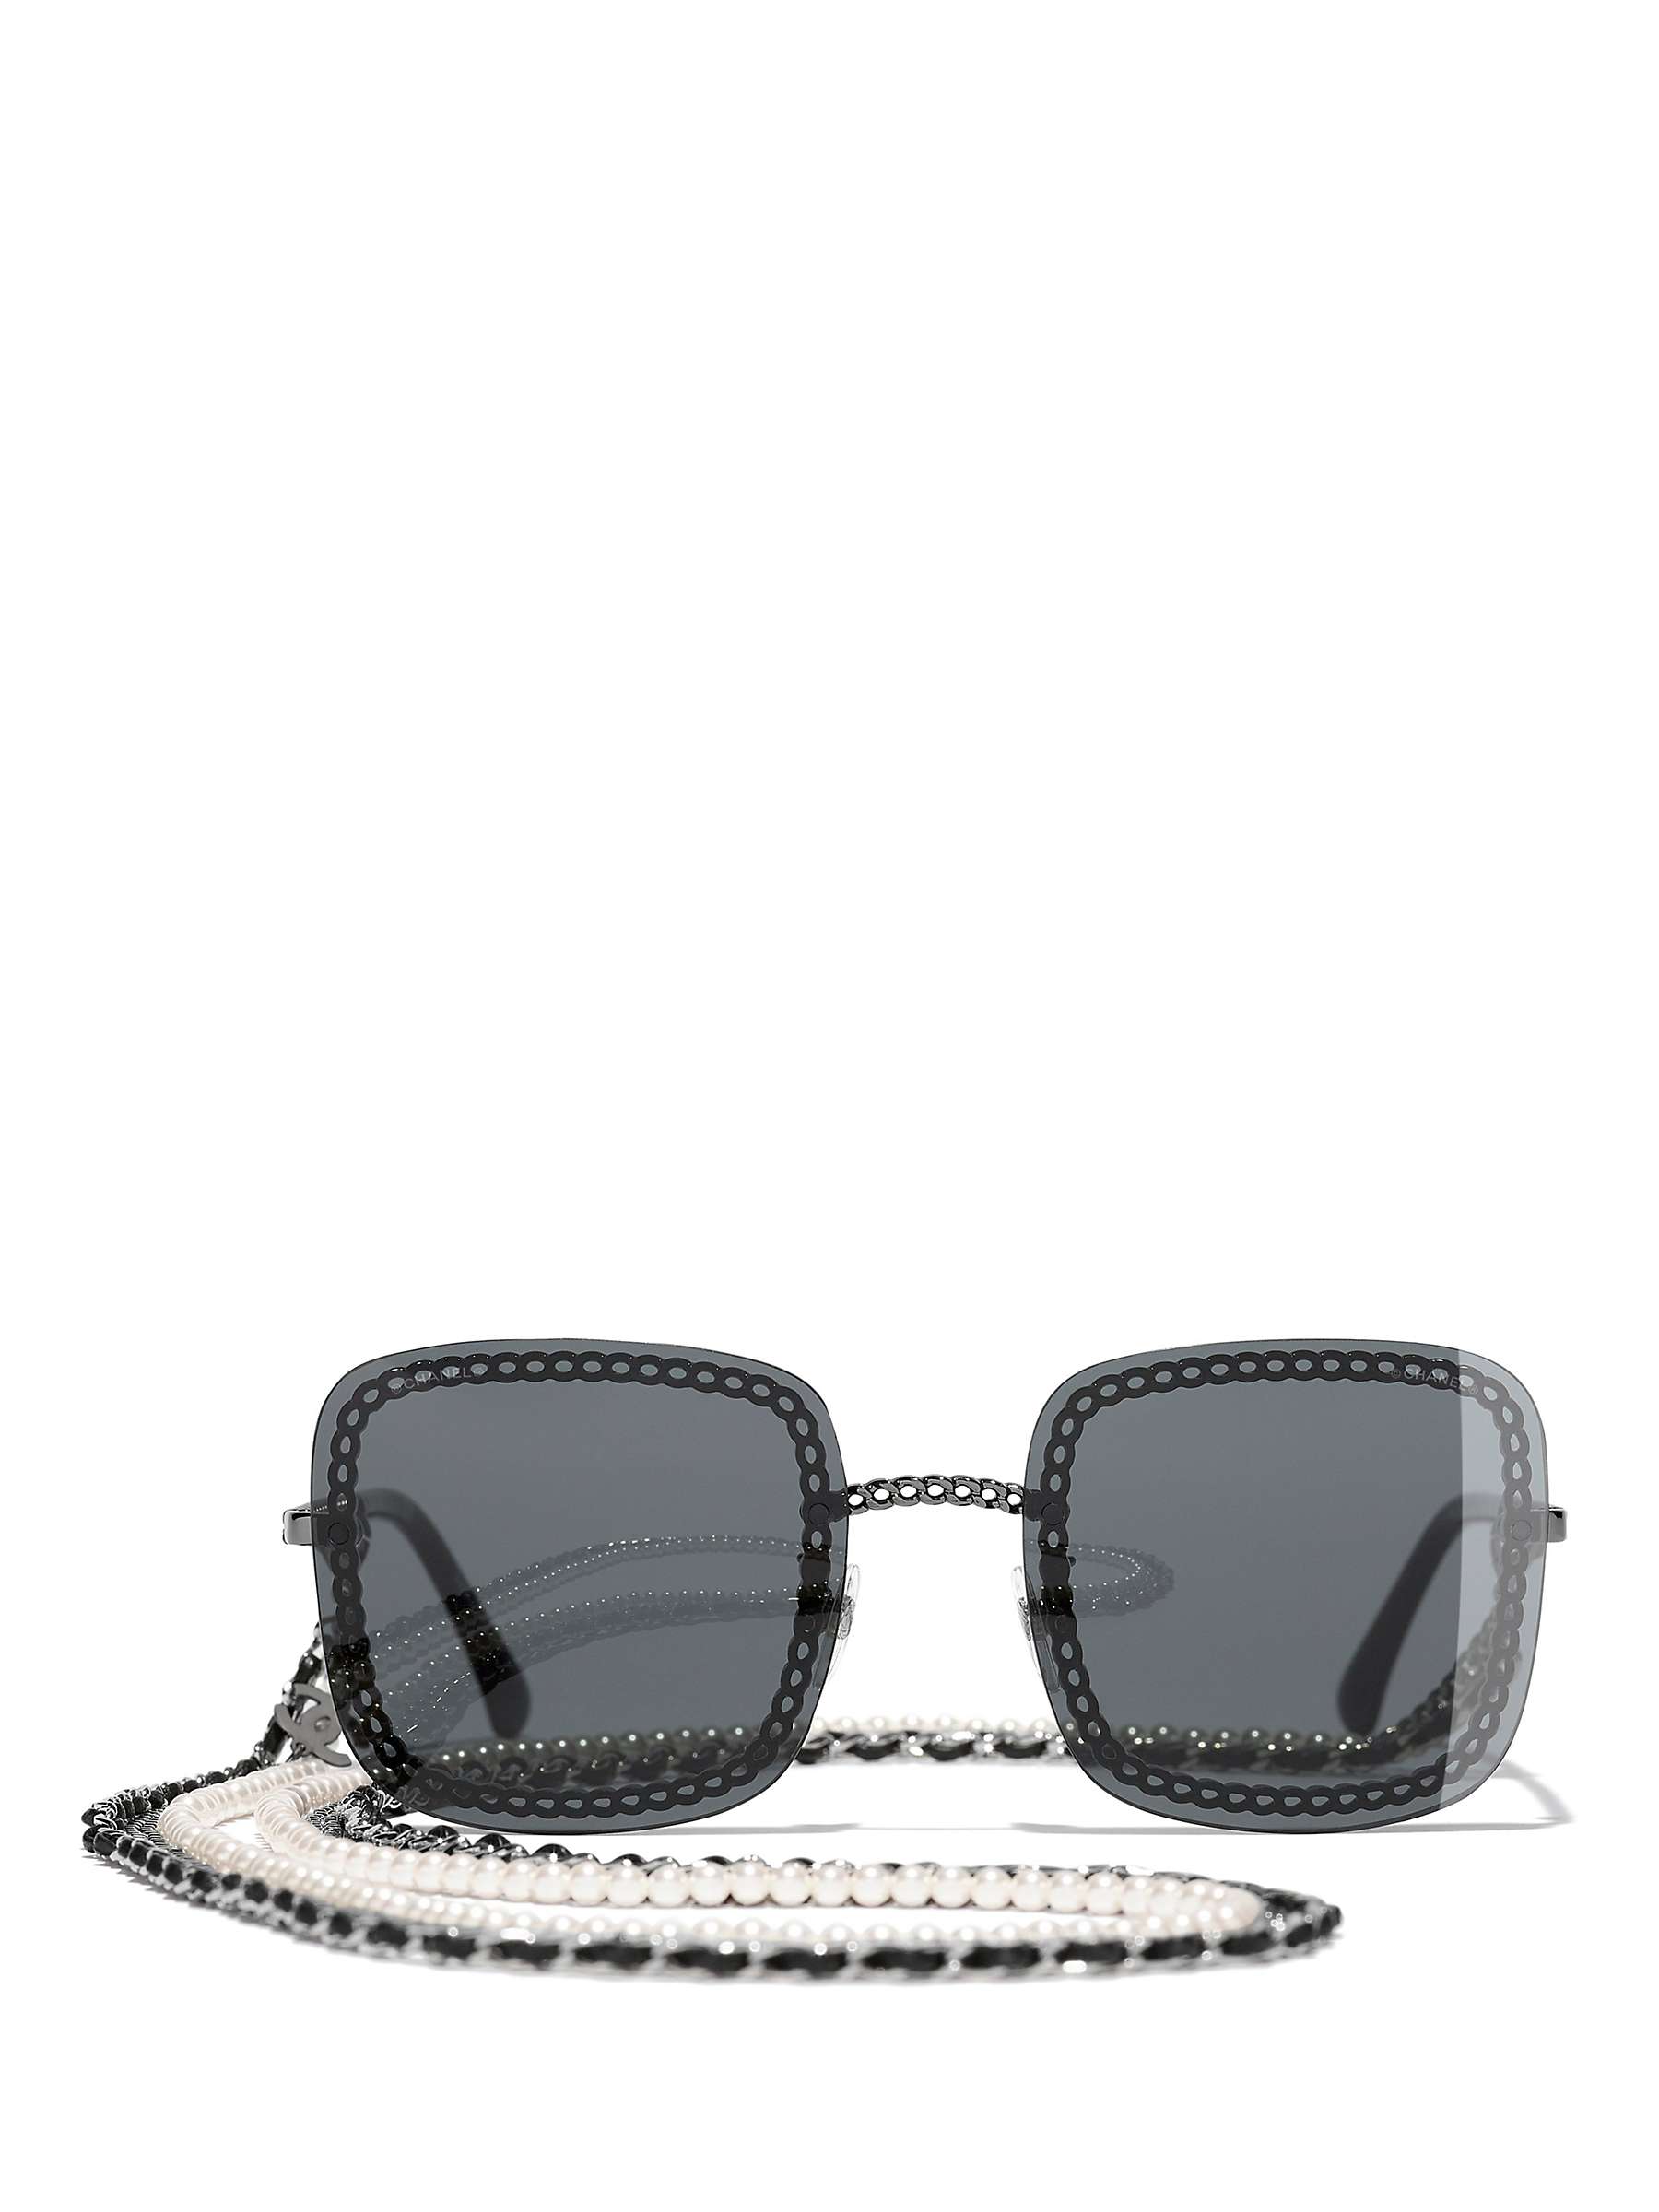 Buy CHANEL Square Sunglasses CH4244 Gunmetal/Grey Online at johnlewis.com